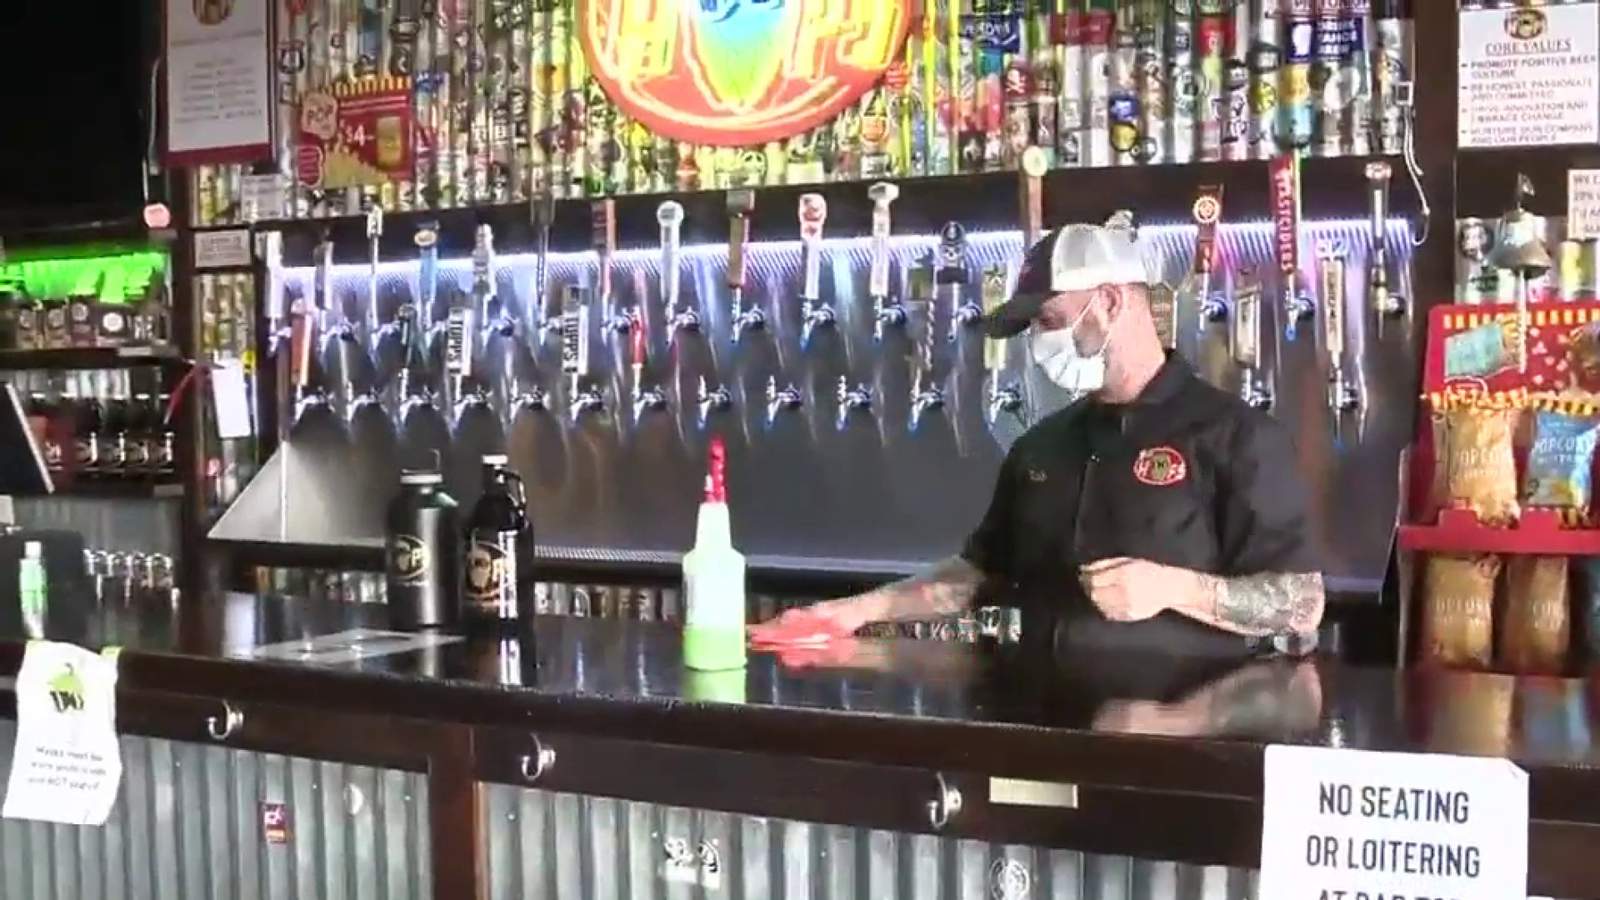 San Antonio bar owner in financial bind amid COVID-19 pandemic